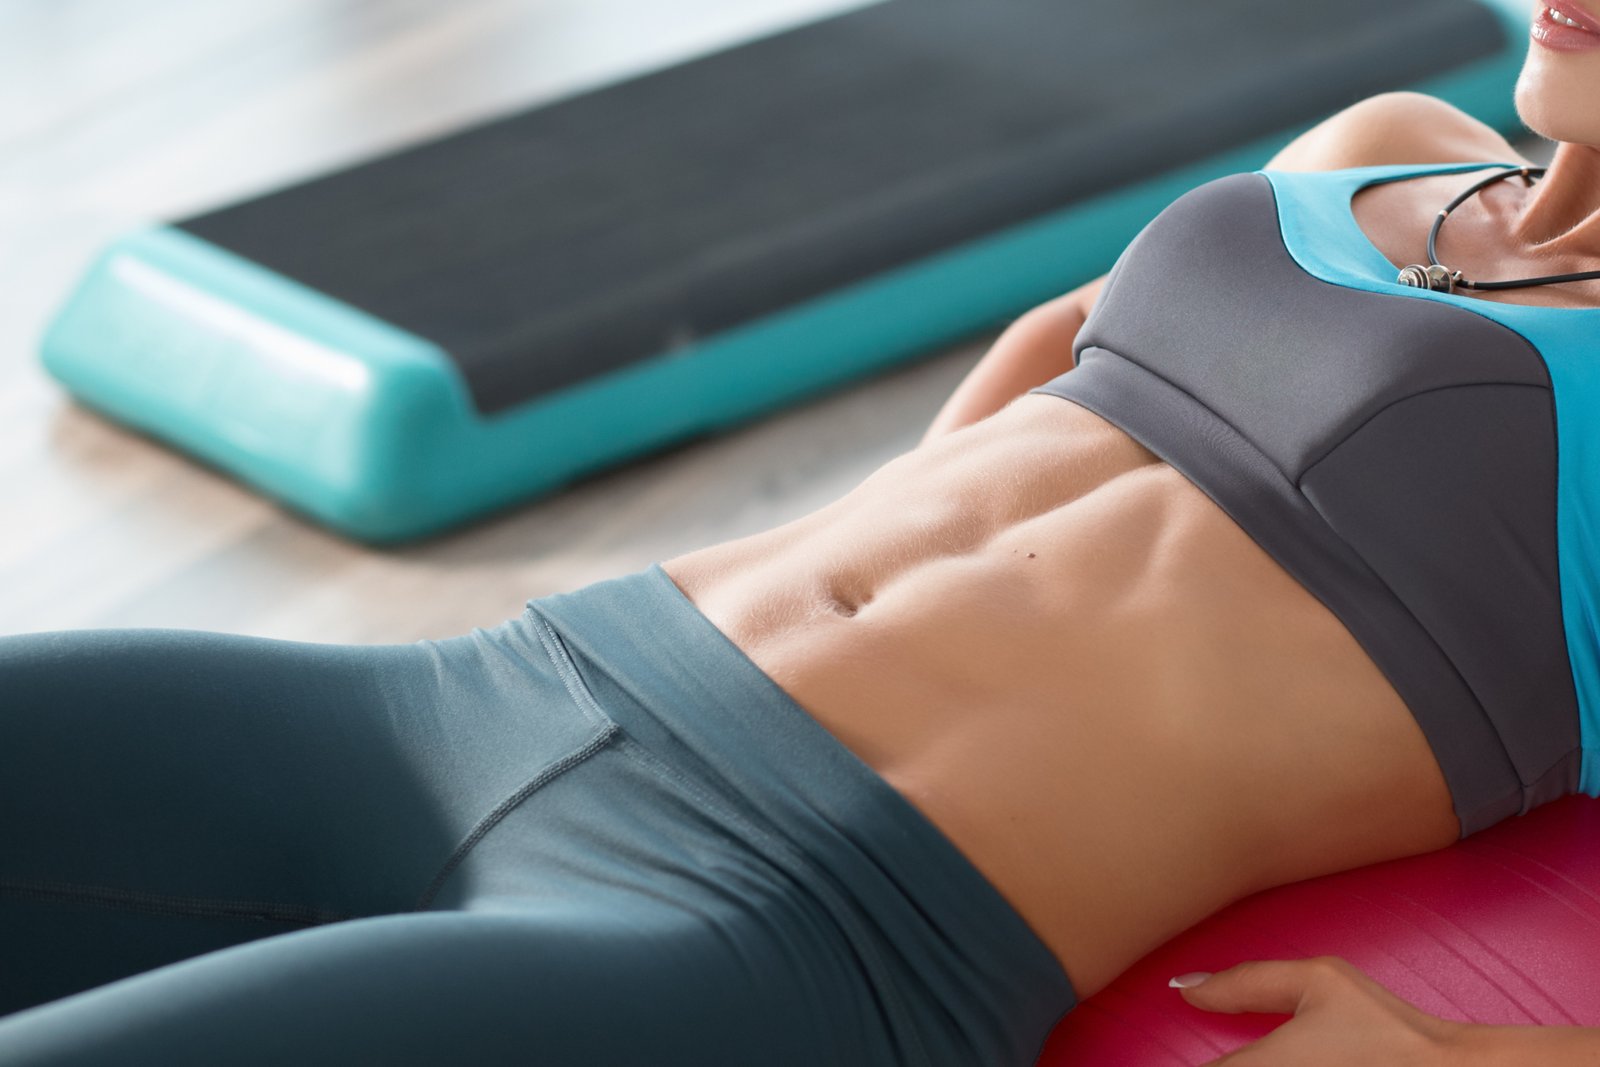 Megan Fox's Diet and Workout Routine [2021]